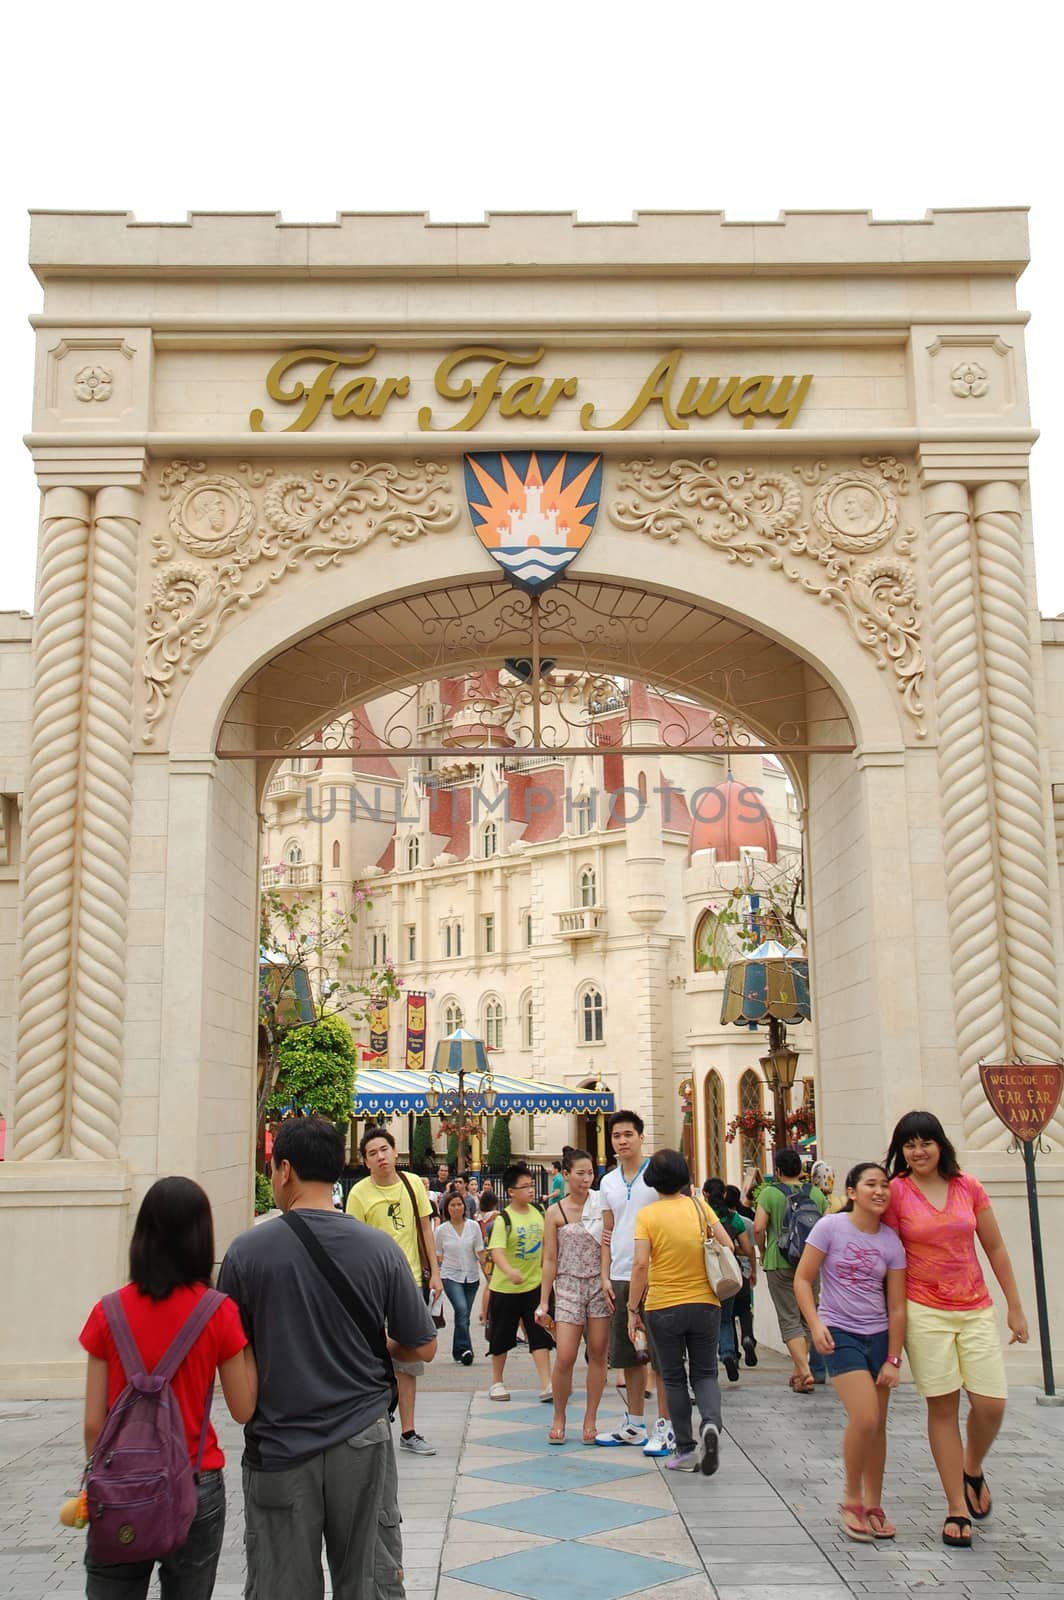 SENTOSA, SG - APRIL 5 - Universal Studios Singapore far far away Shrek theme arch on April 5, 2012 in Sentosa, Singapore.